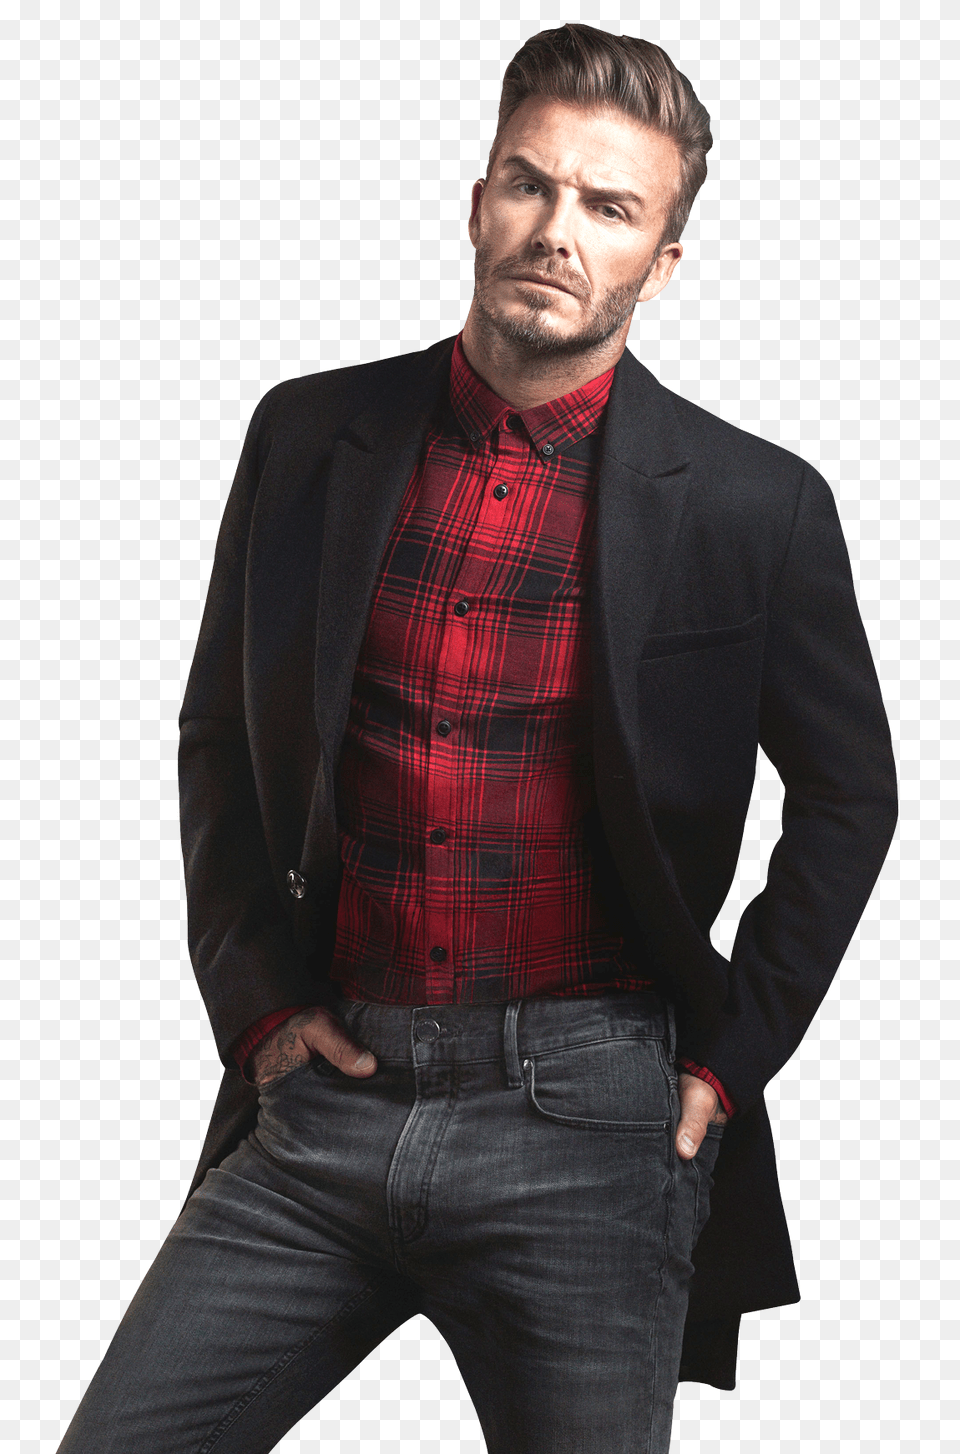 Pngpix Com David Beckham Transparent Image, Jacket, Blazer, Clothing, Coat Free Png